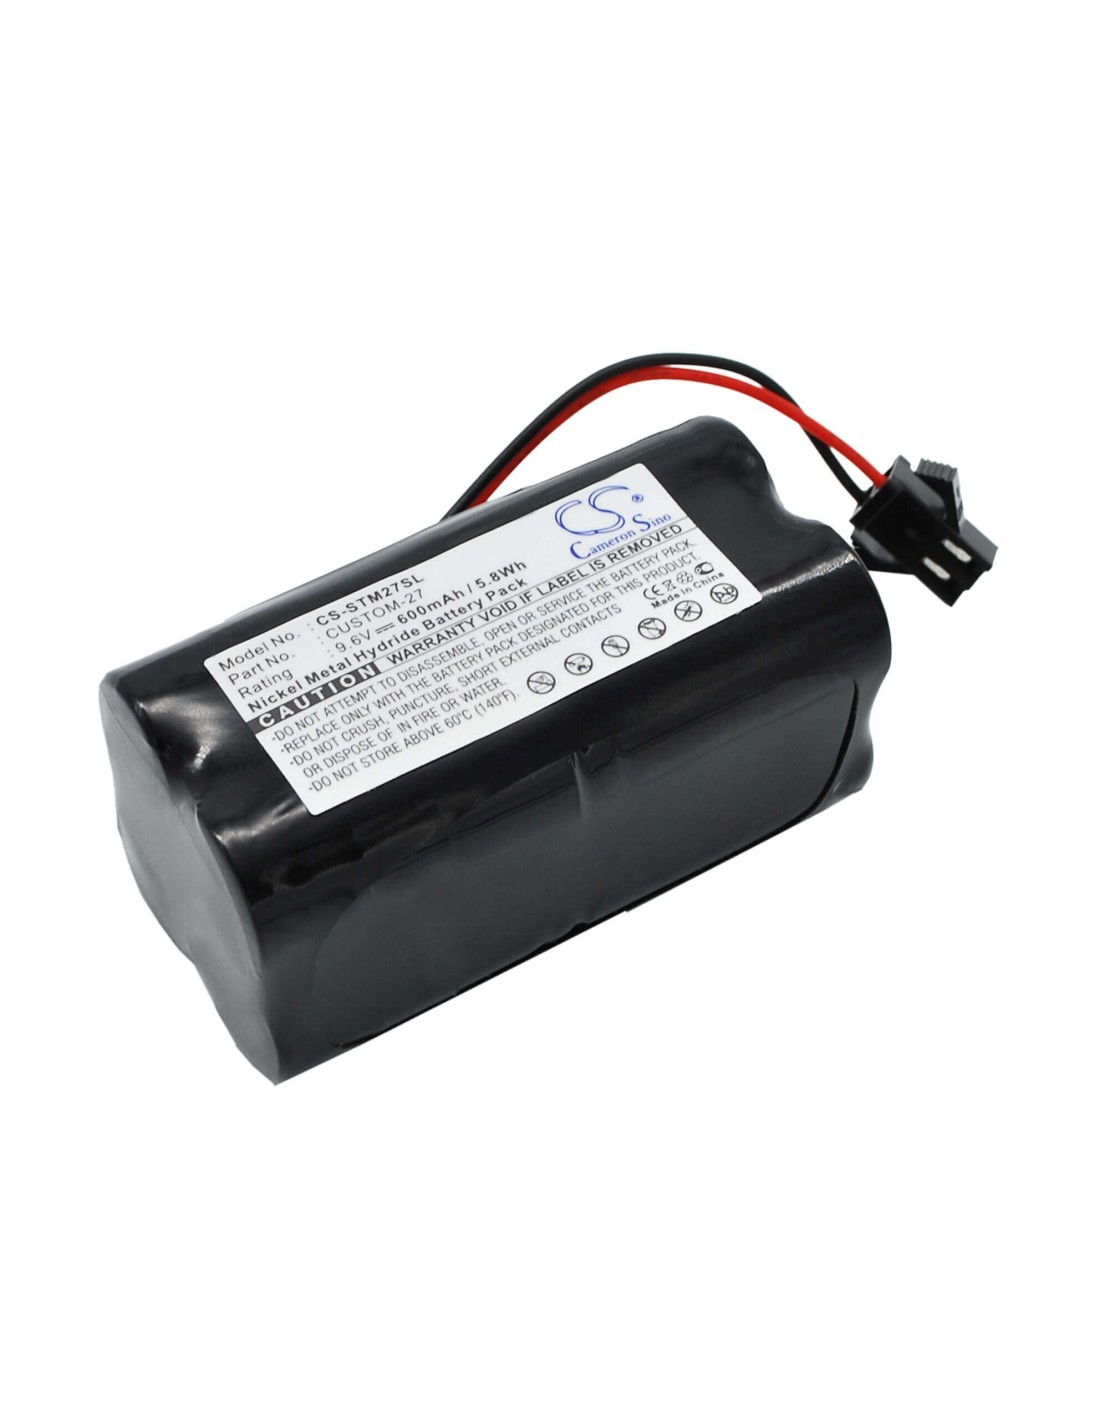 Battery for Tri-tronics 1016200 9.6V, 600mAh - 5.76Wh